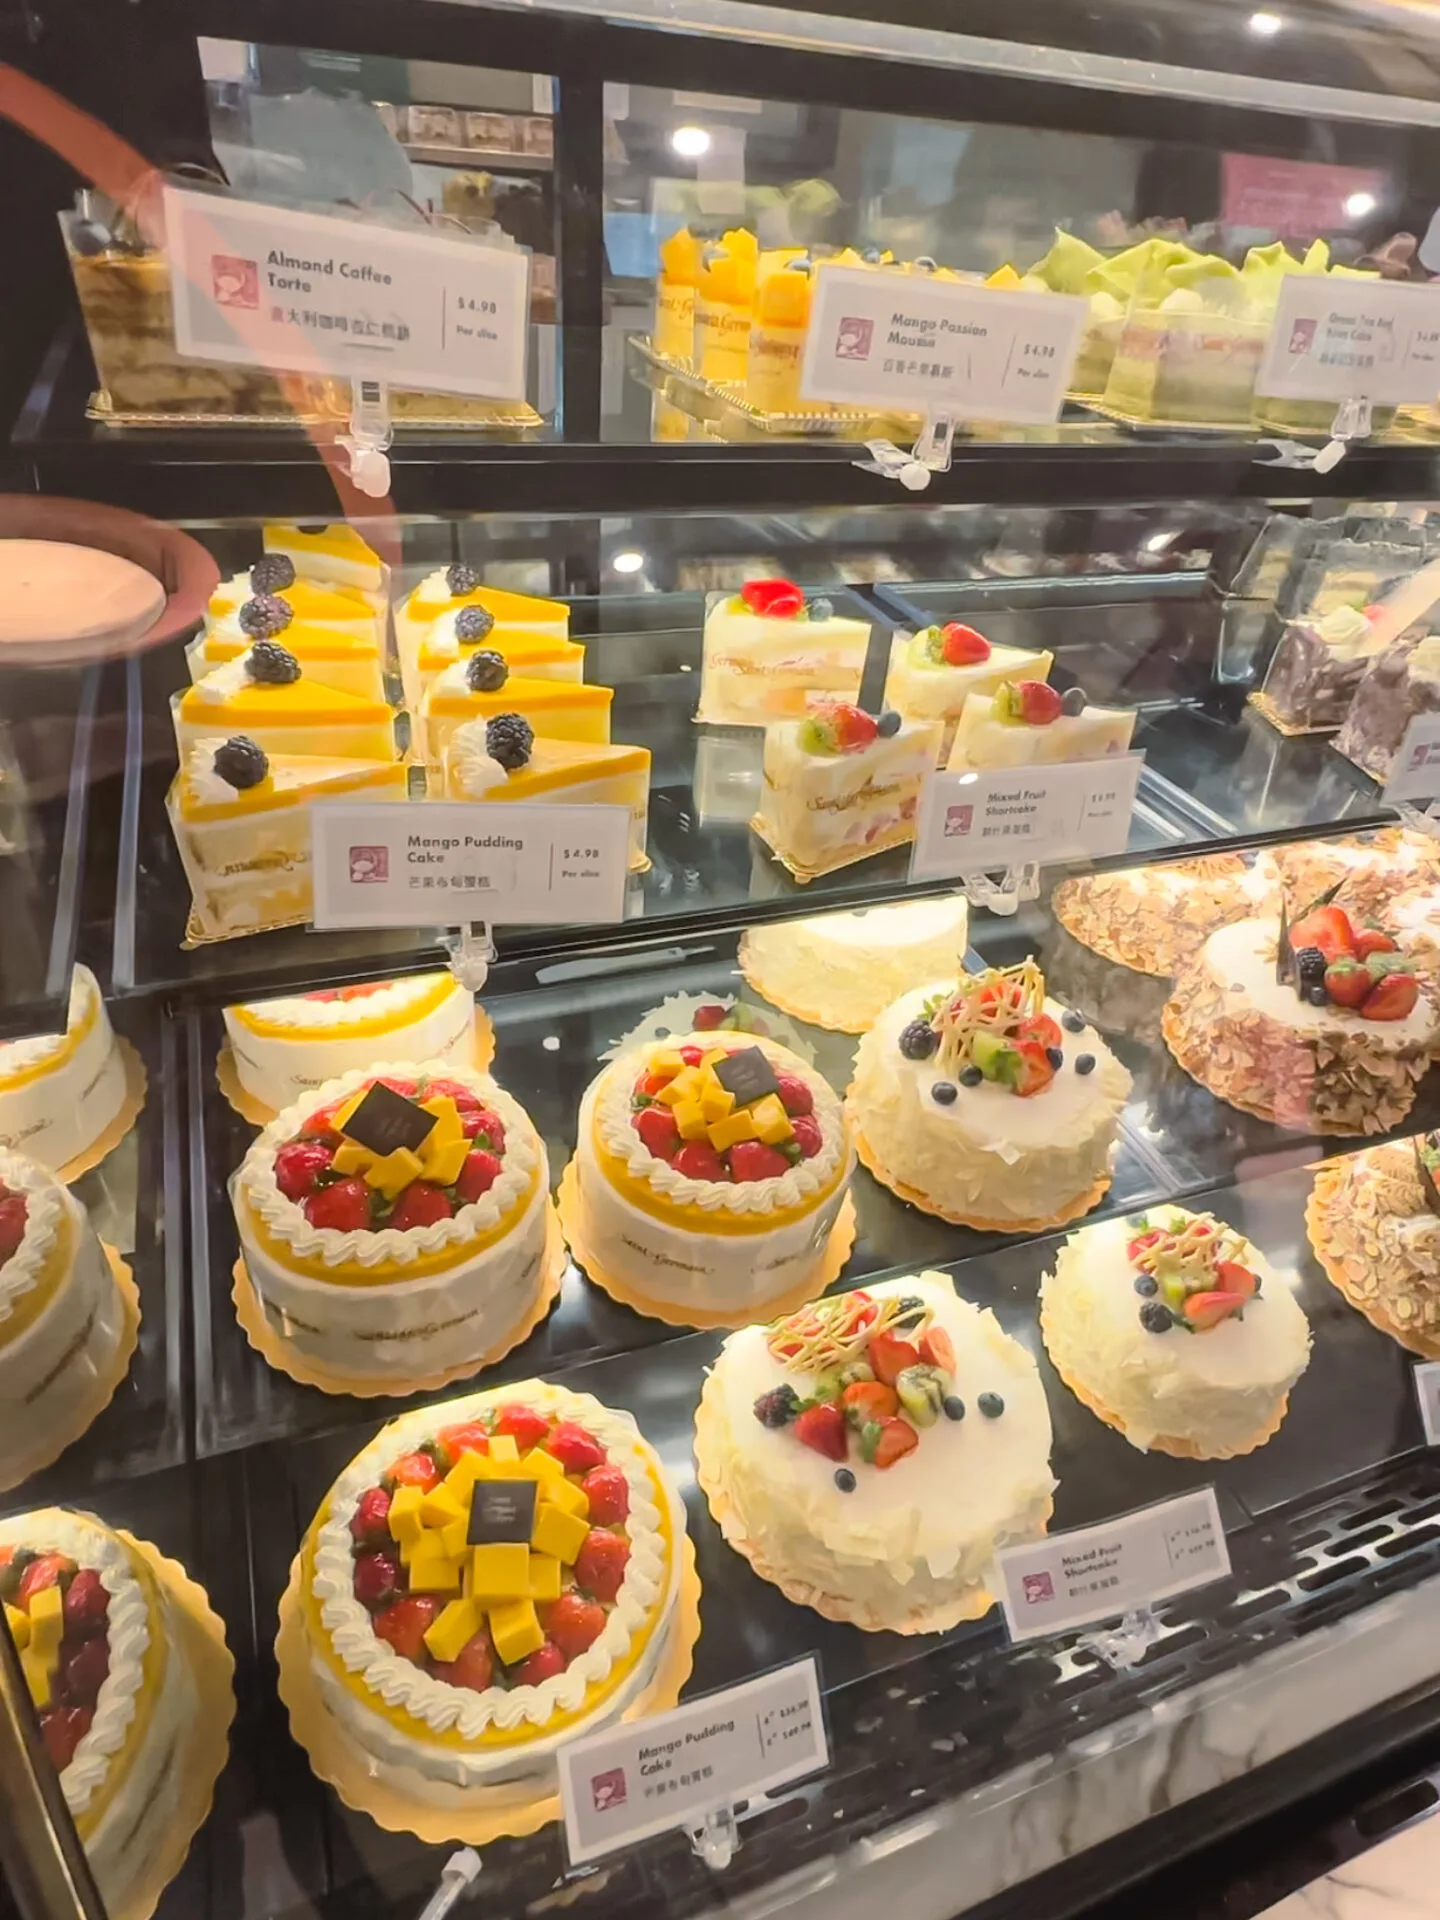 Cakes from Saint Germain Bakery inside Markville Mall in Markham, Ontario